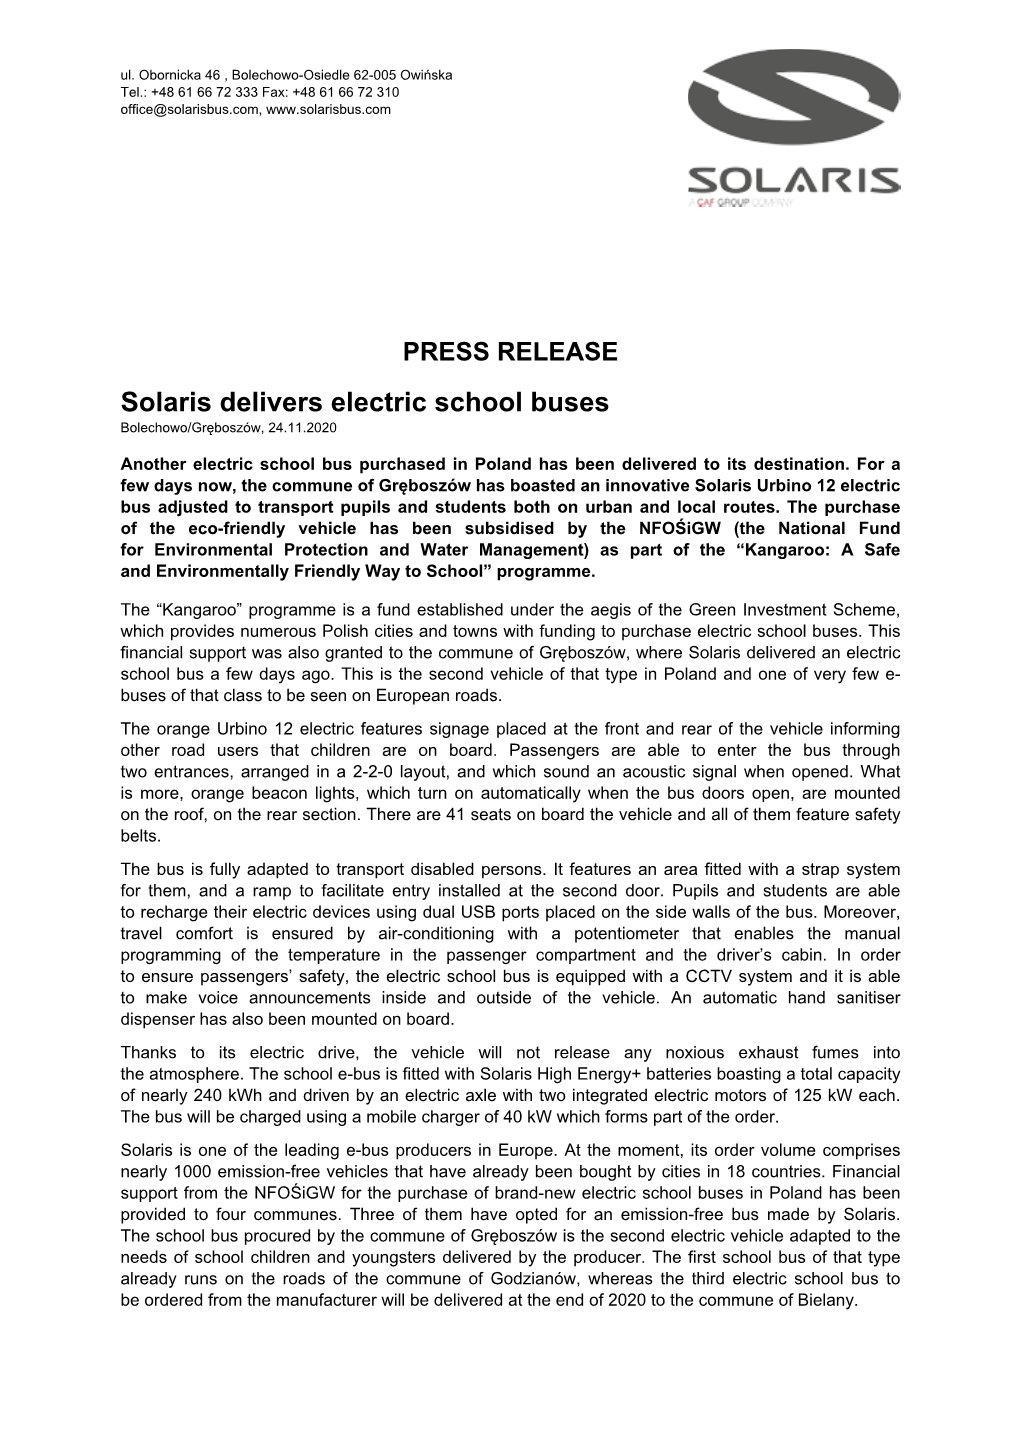 PRESS RELEASE Solaris Delivers Electric School Buses